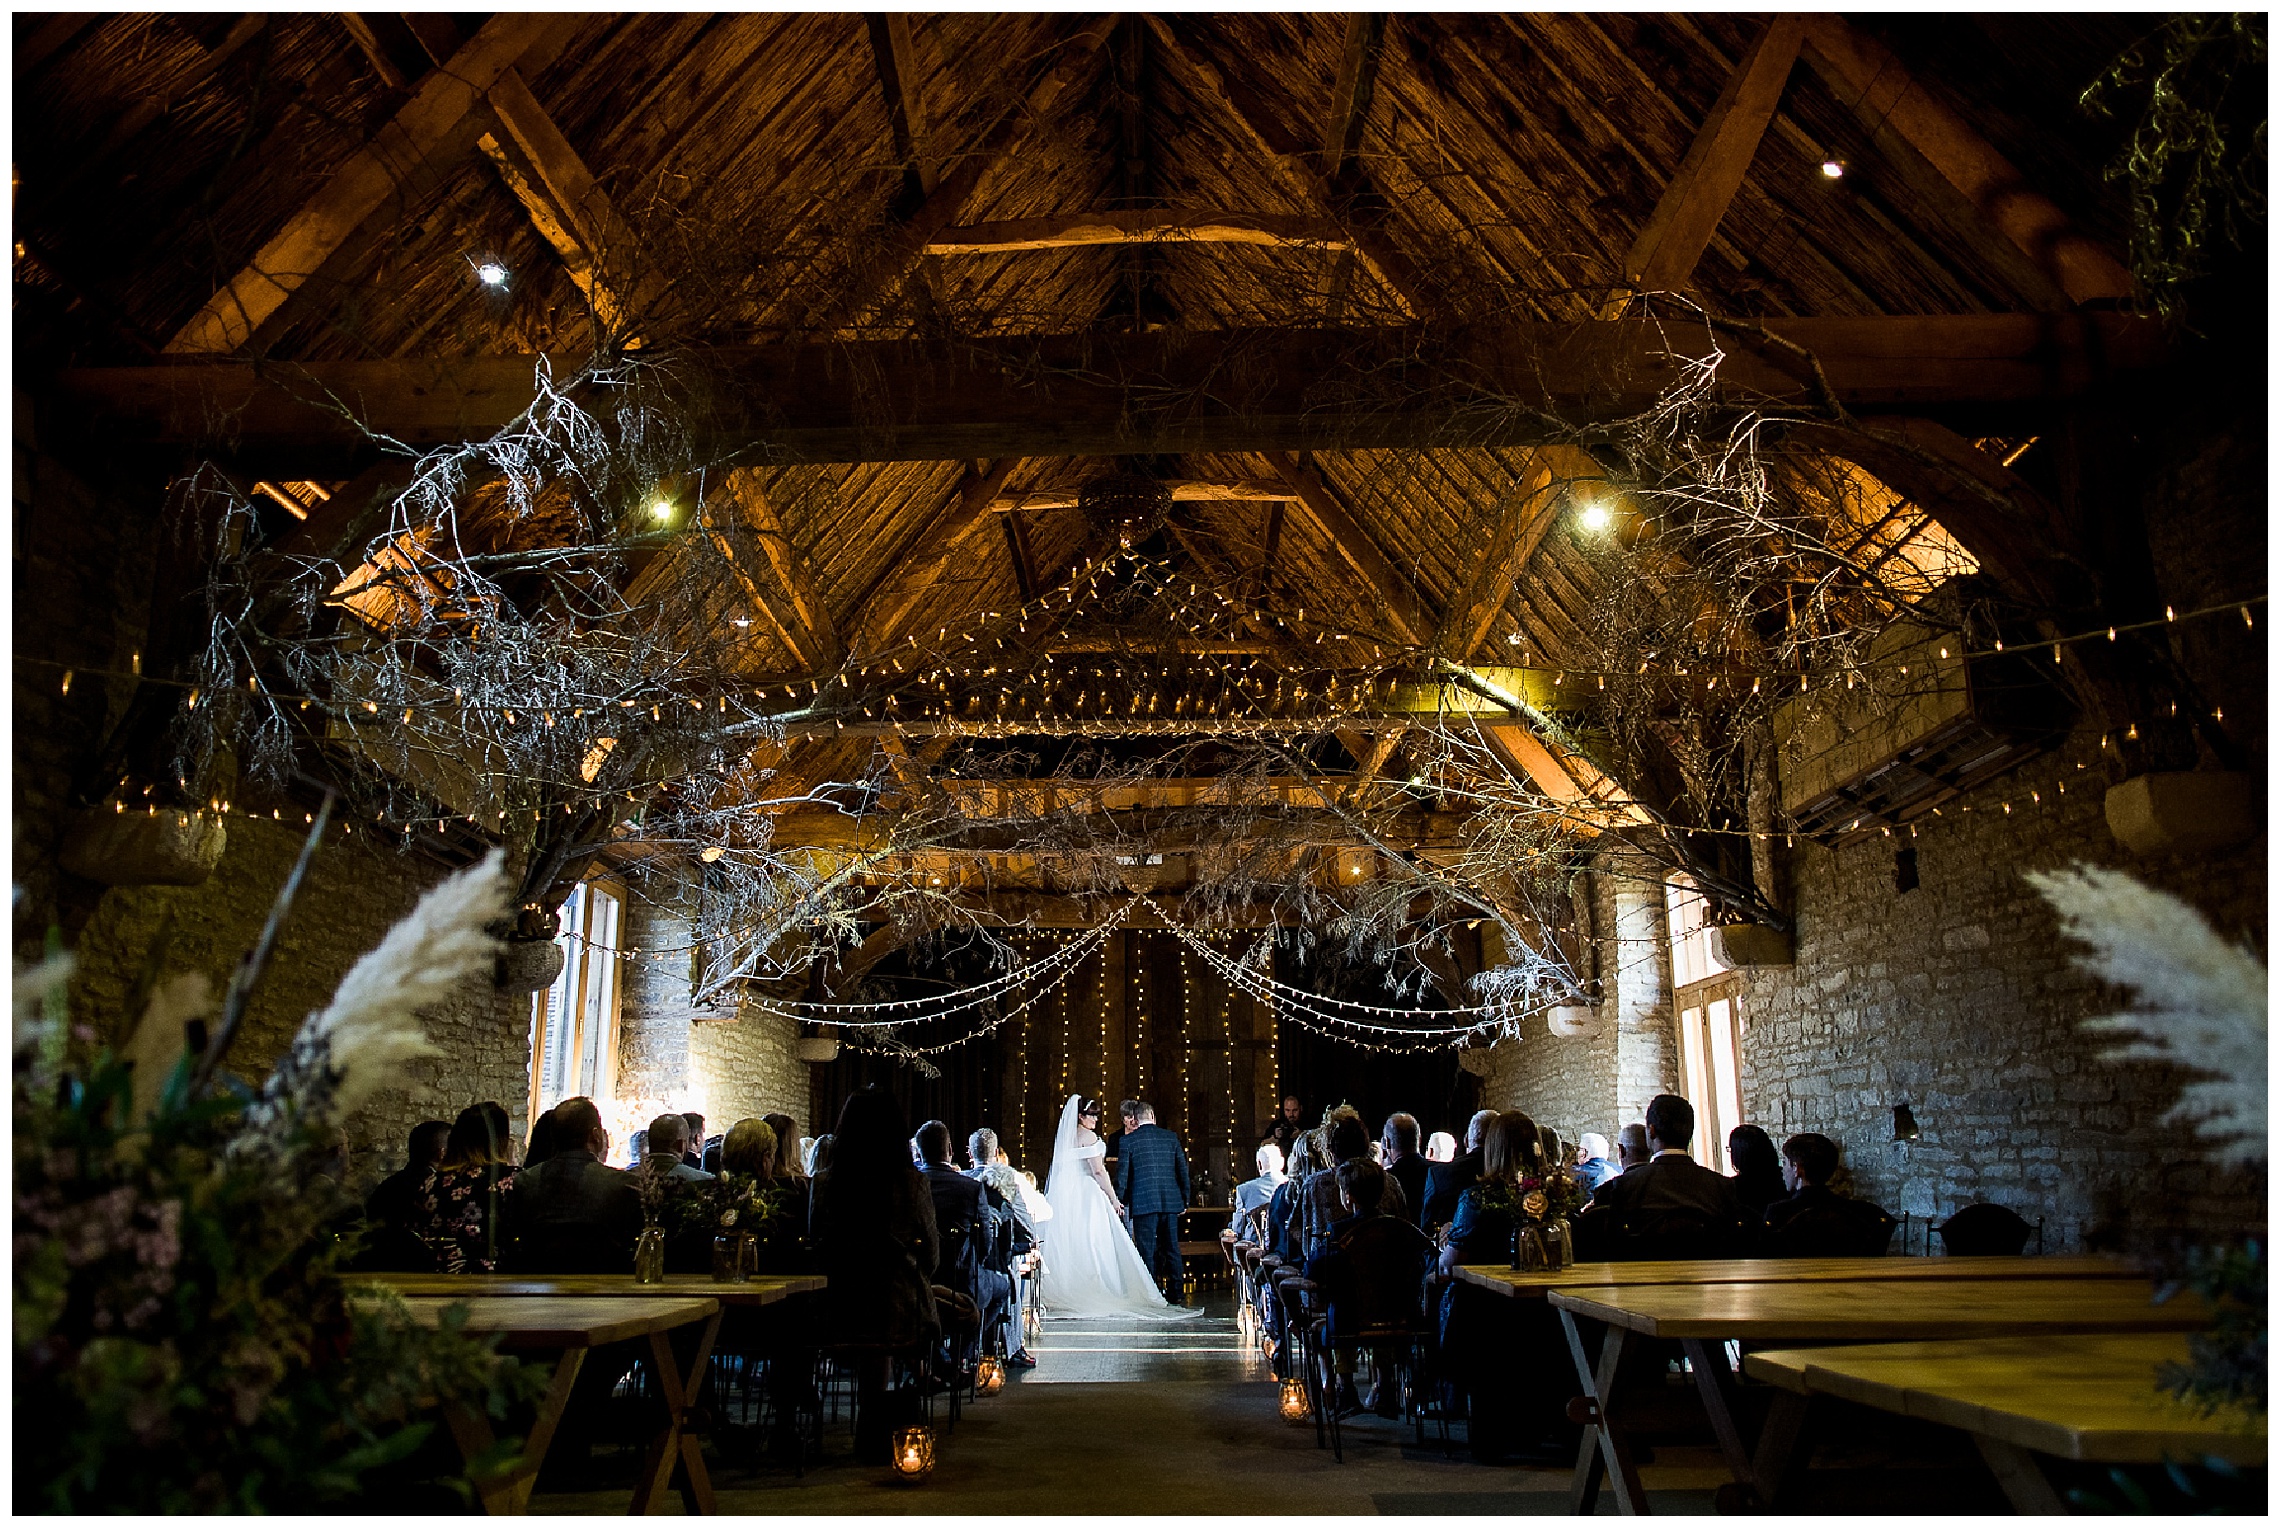 tythe barn in launton wedding ceremony with fairy lights